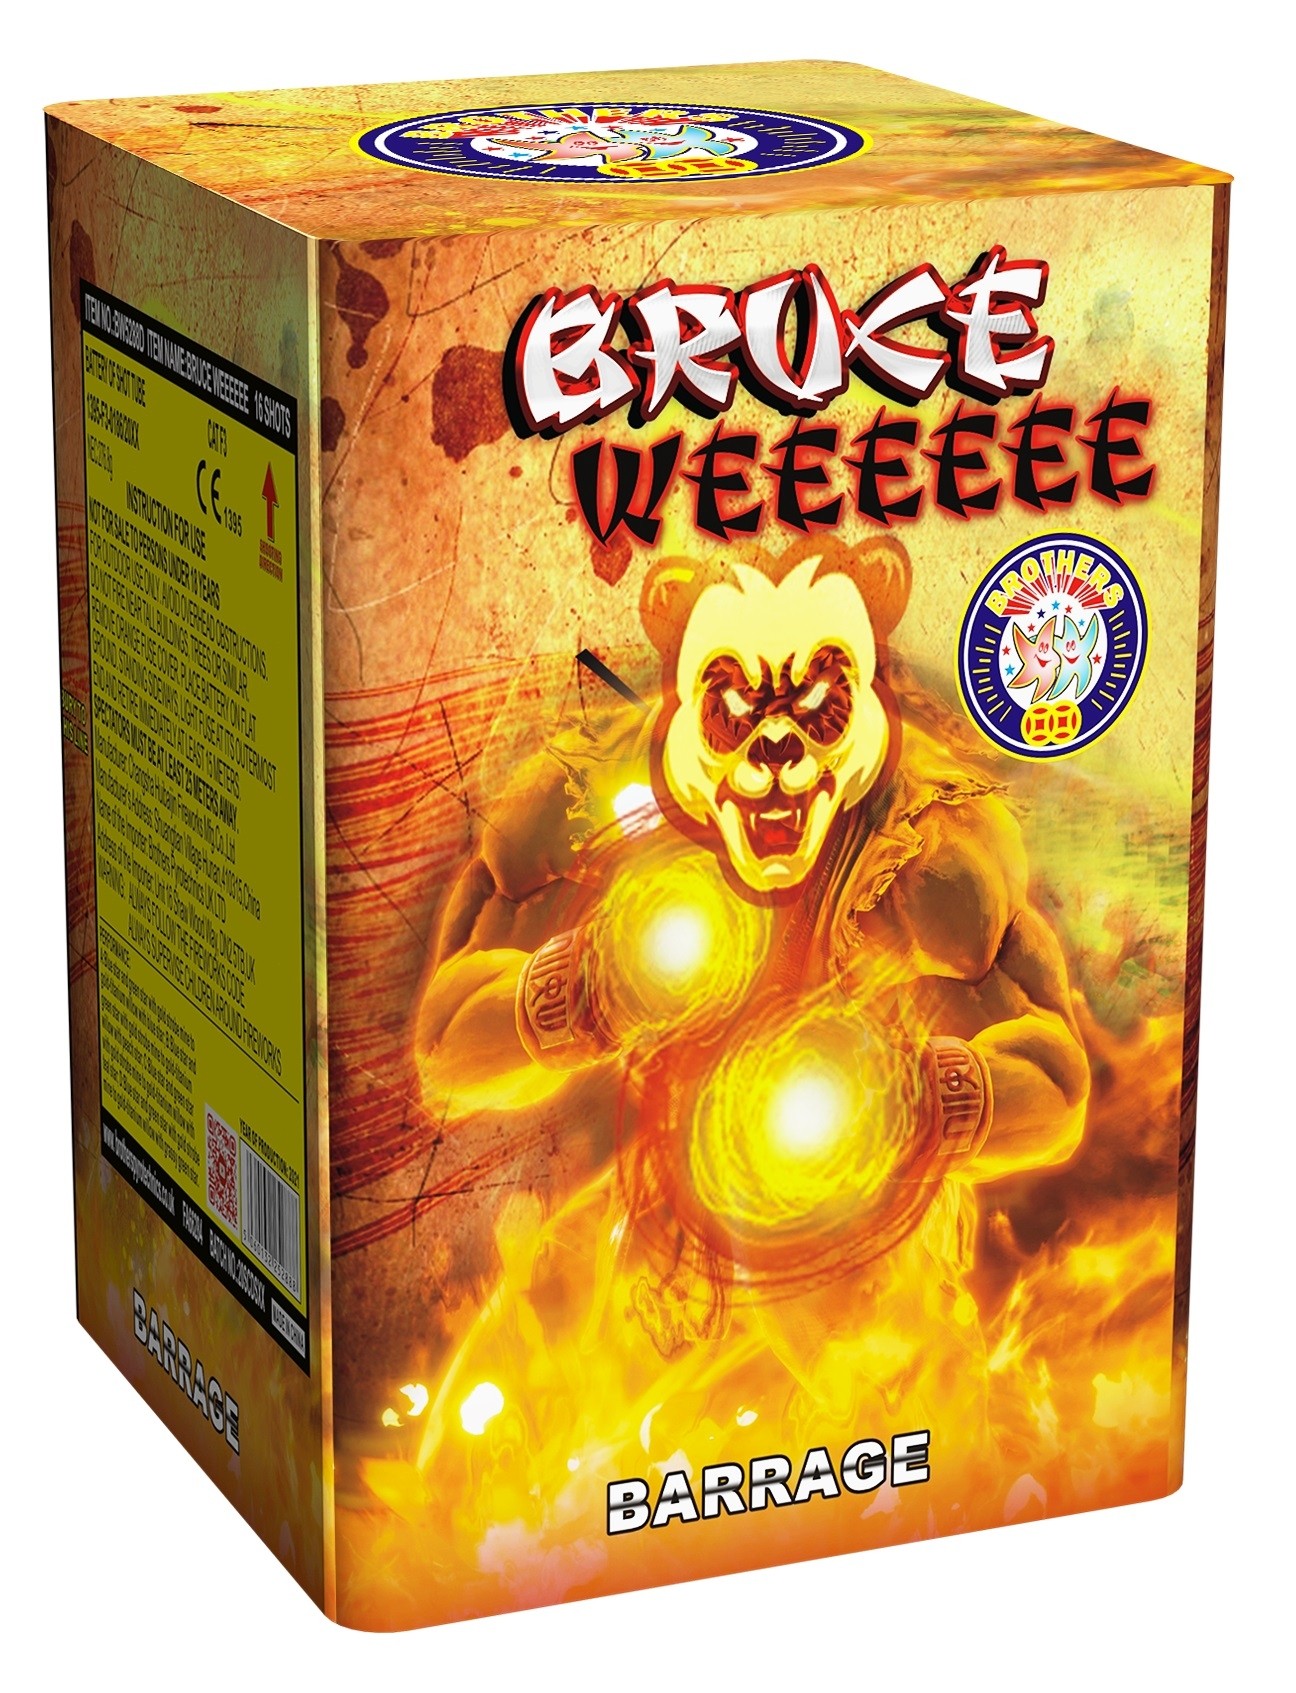 Bruce Weeeeee Barrage by Brothers Pyrotechnics